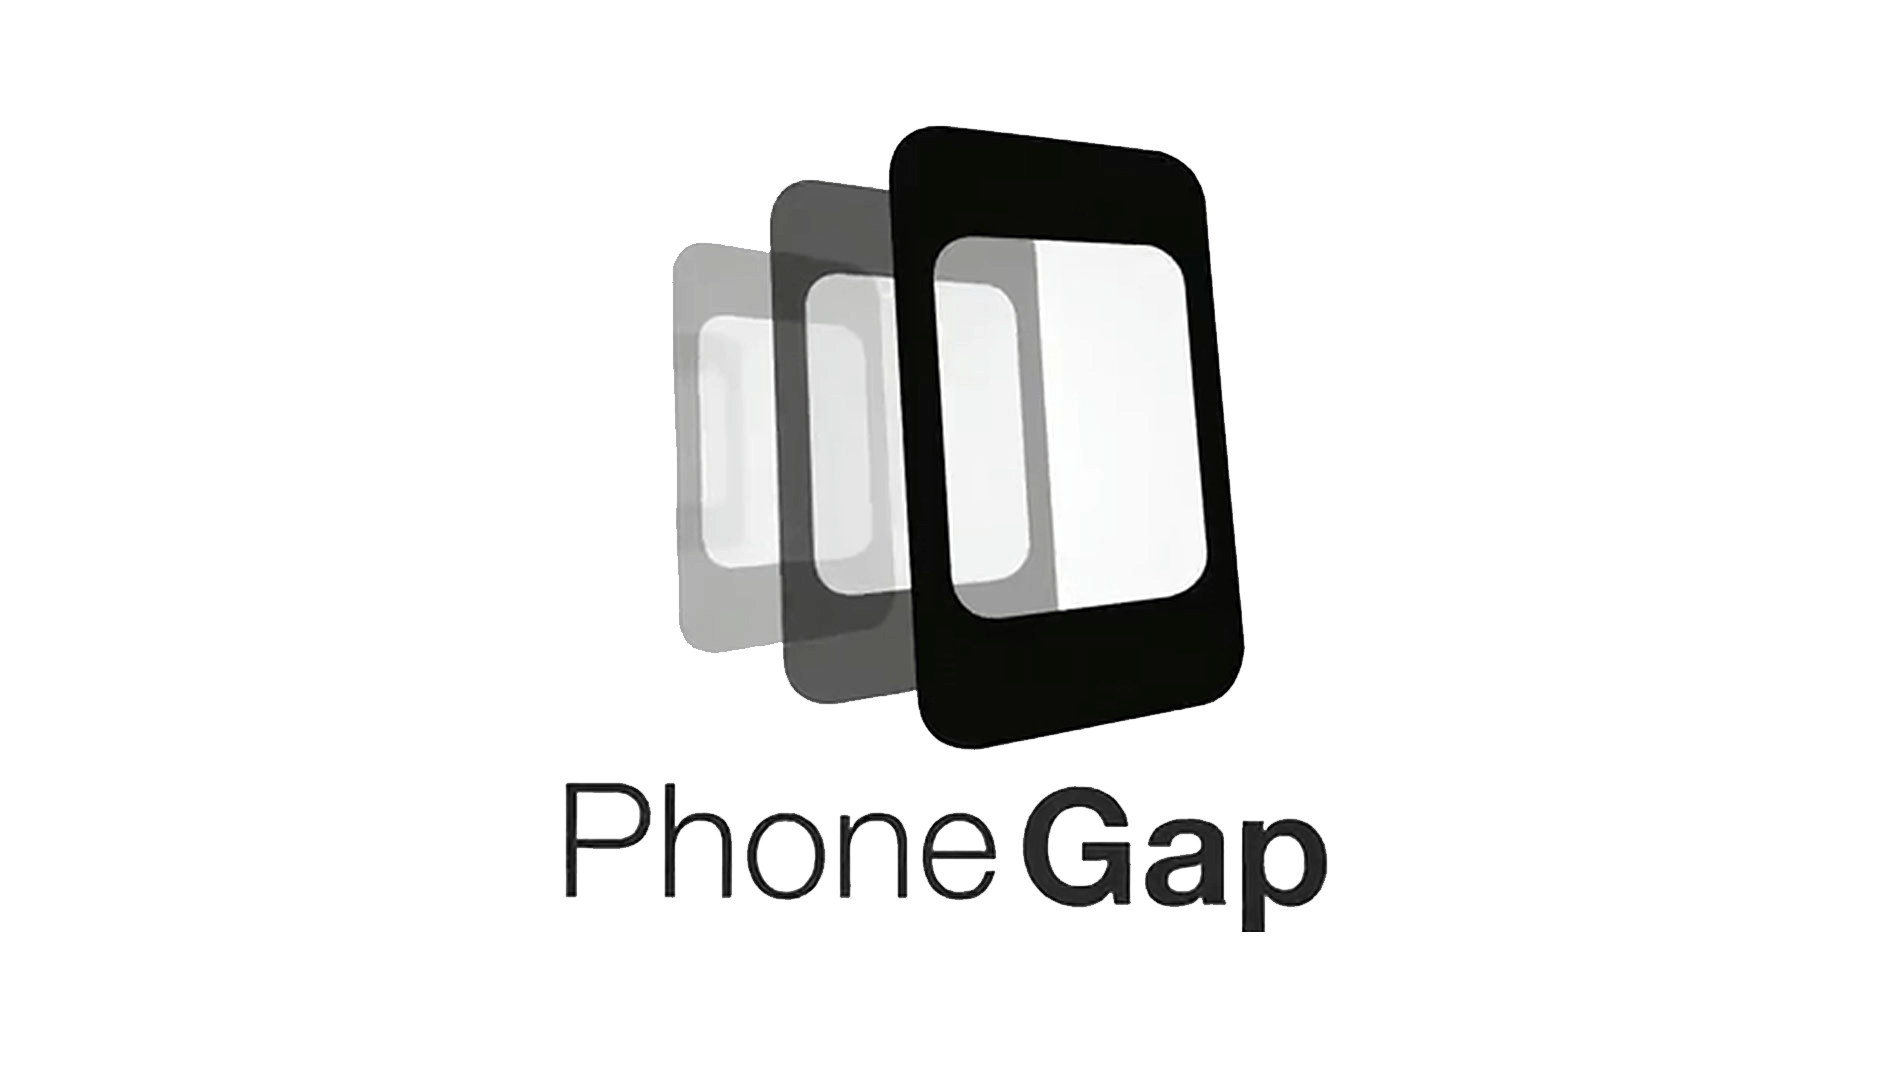 PhoneGap Development